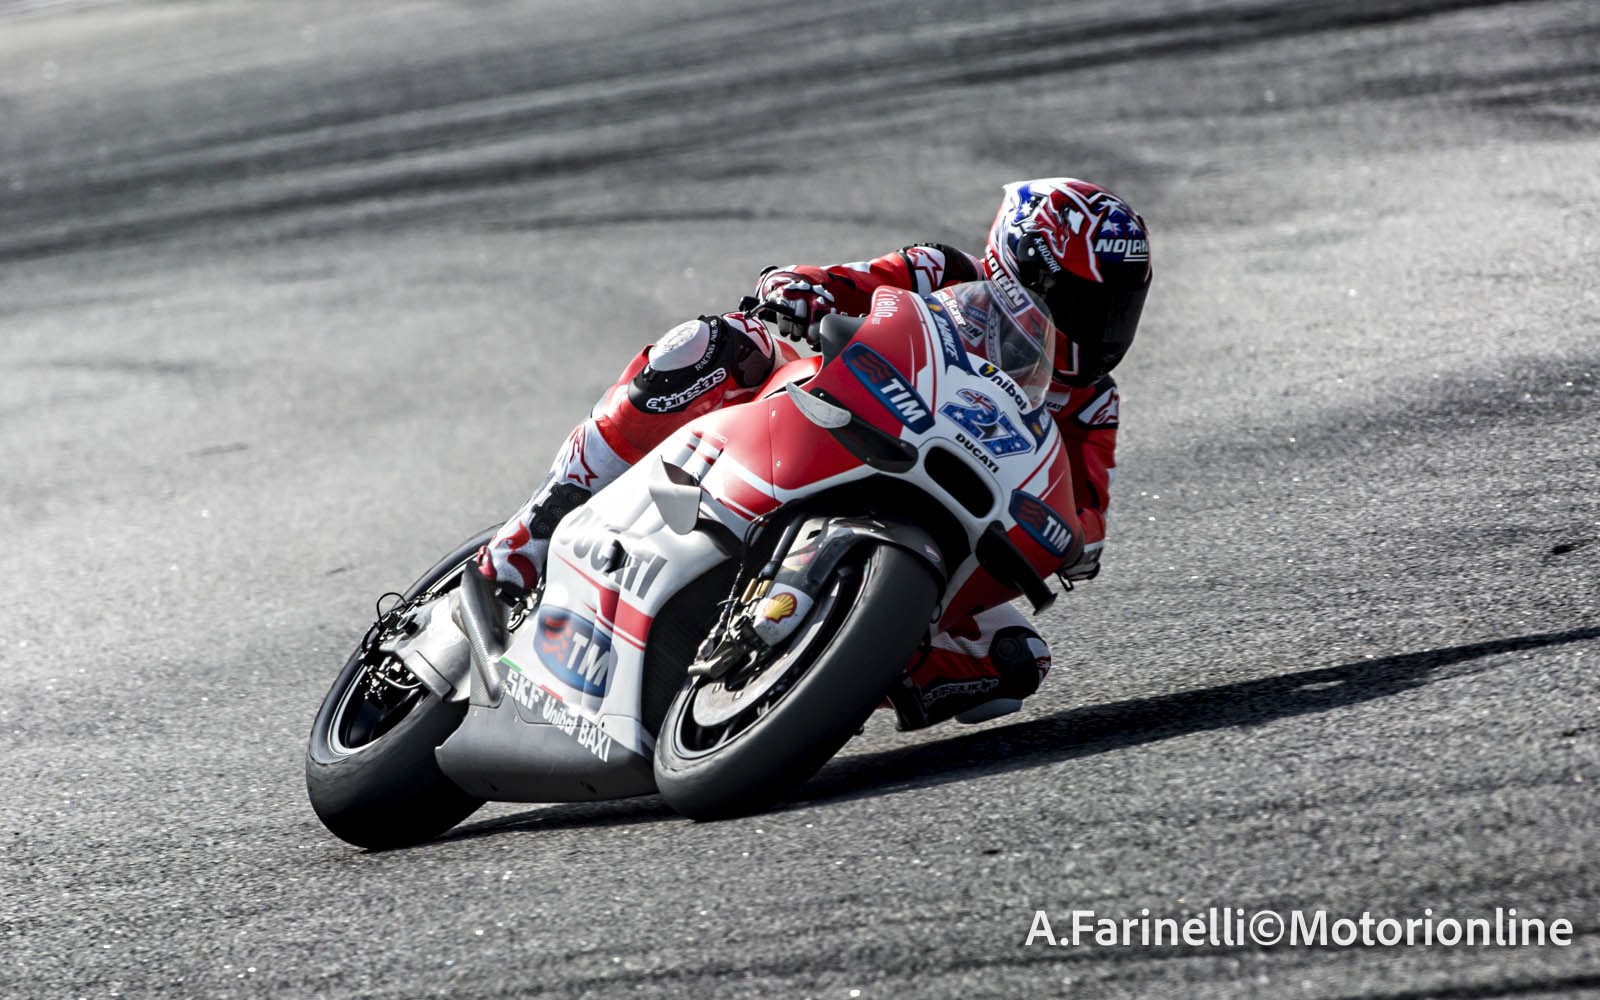 Test Ducati Stoner Sepang